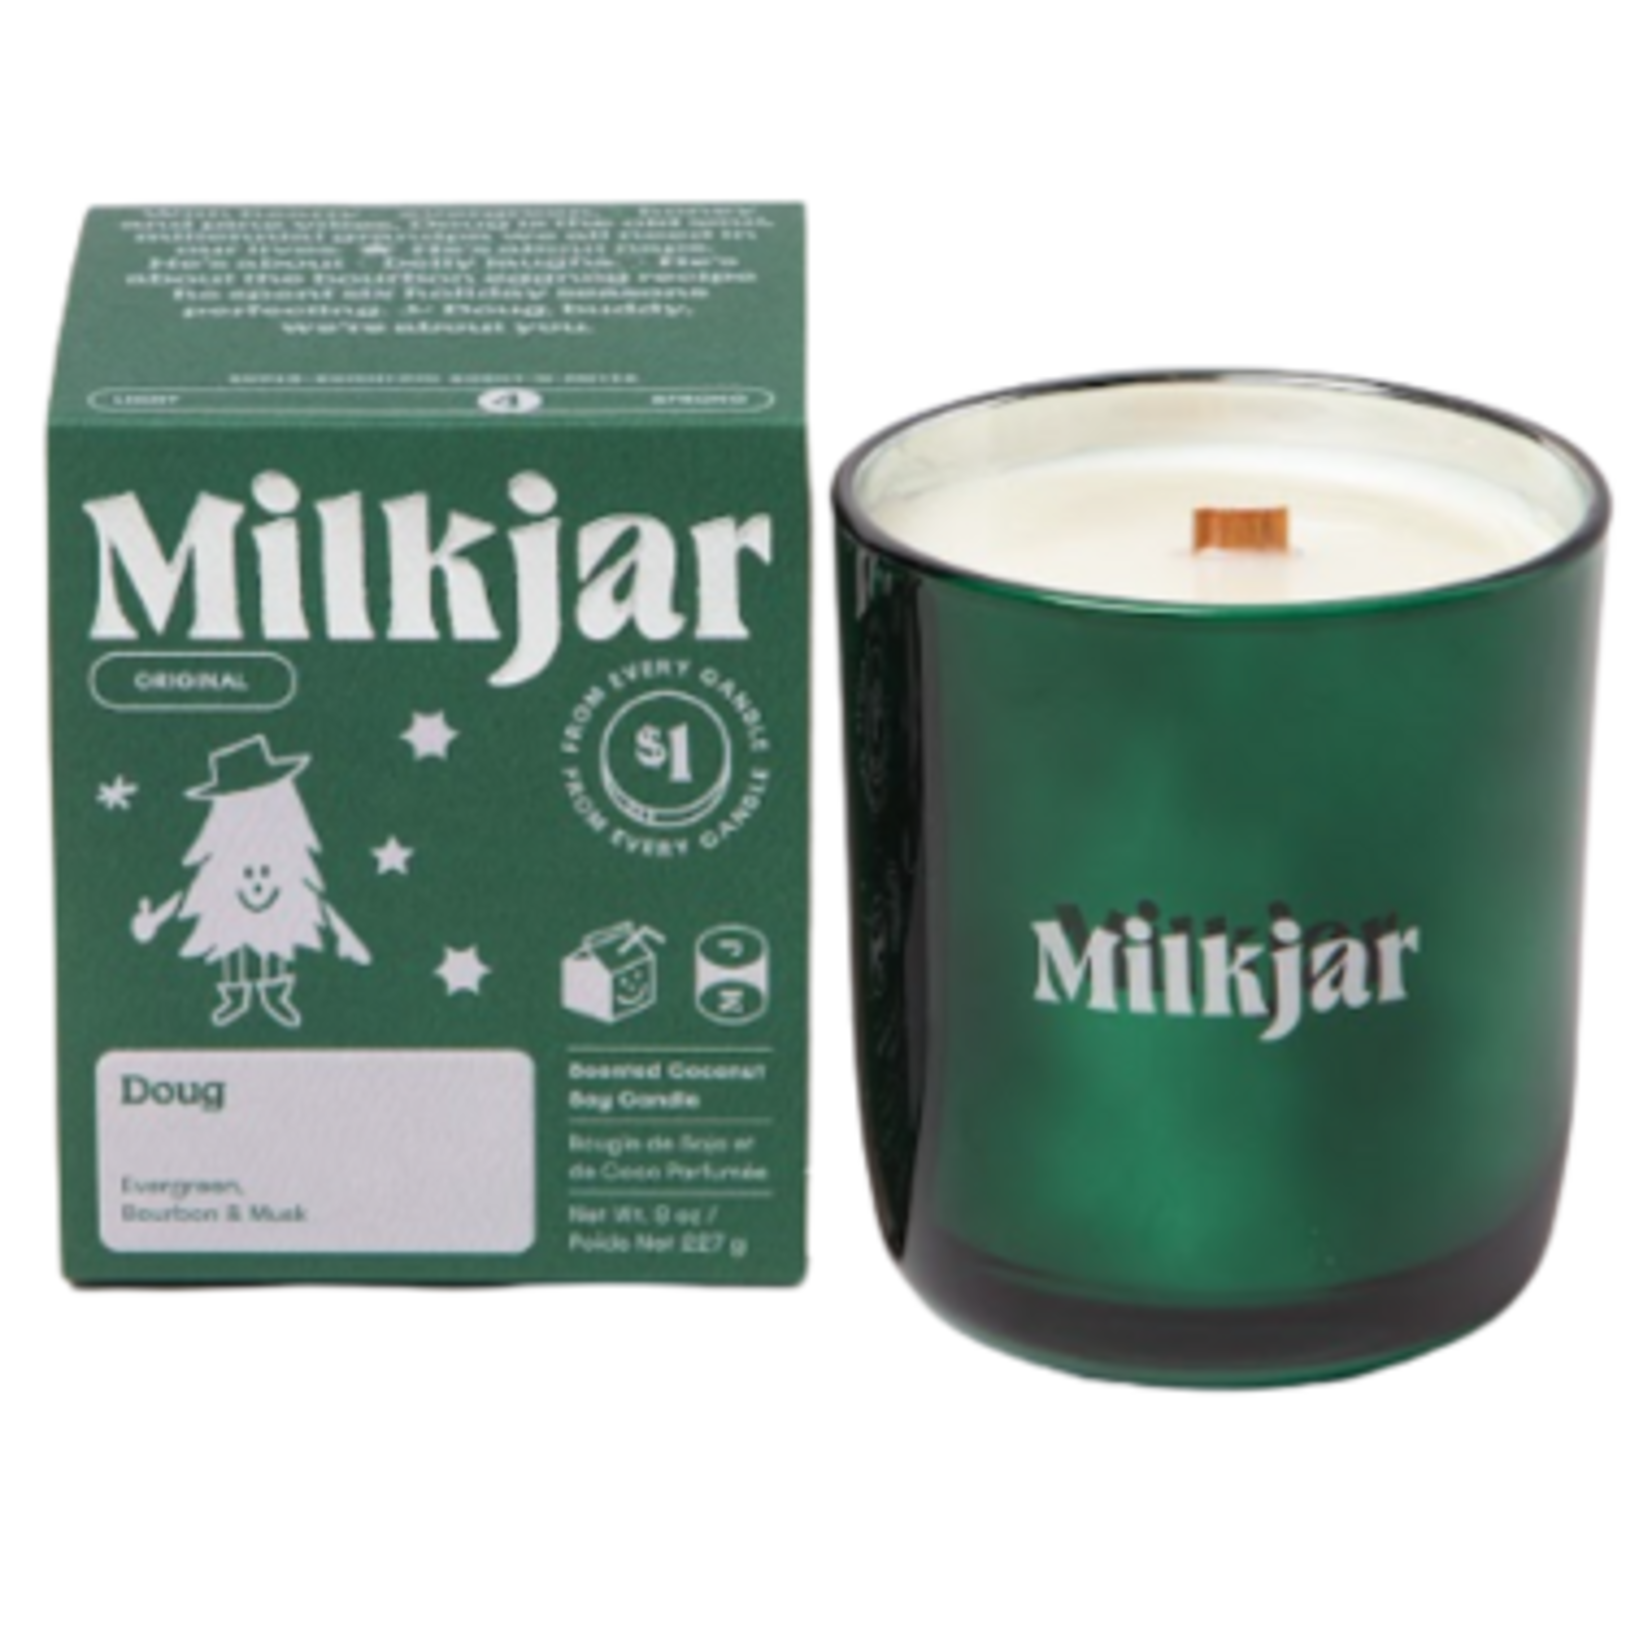 Milk Jar Candle Co. Doug 8oz